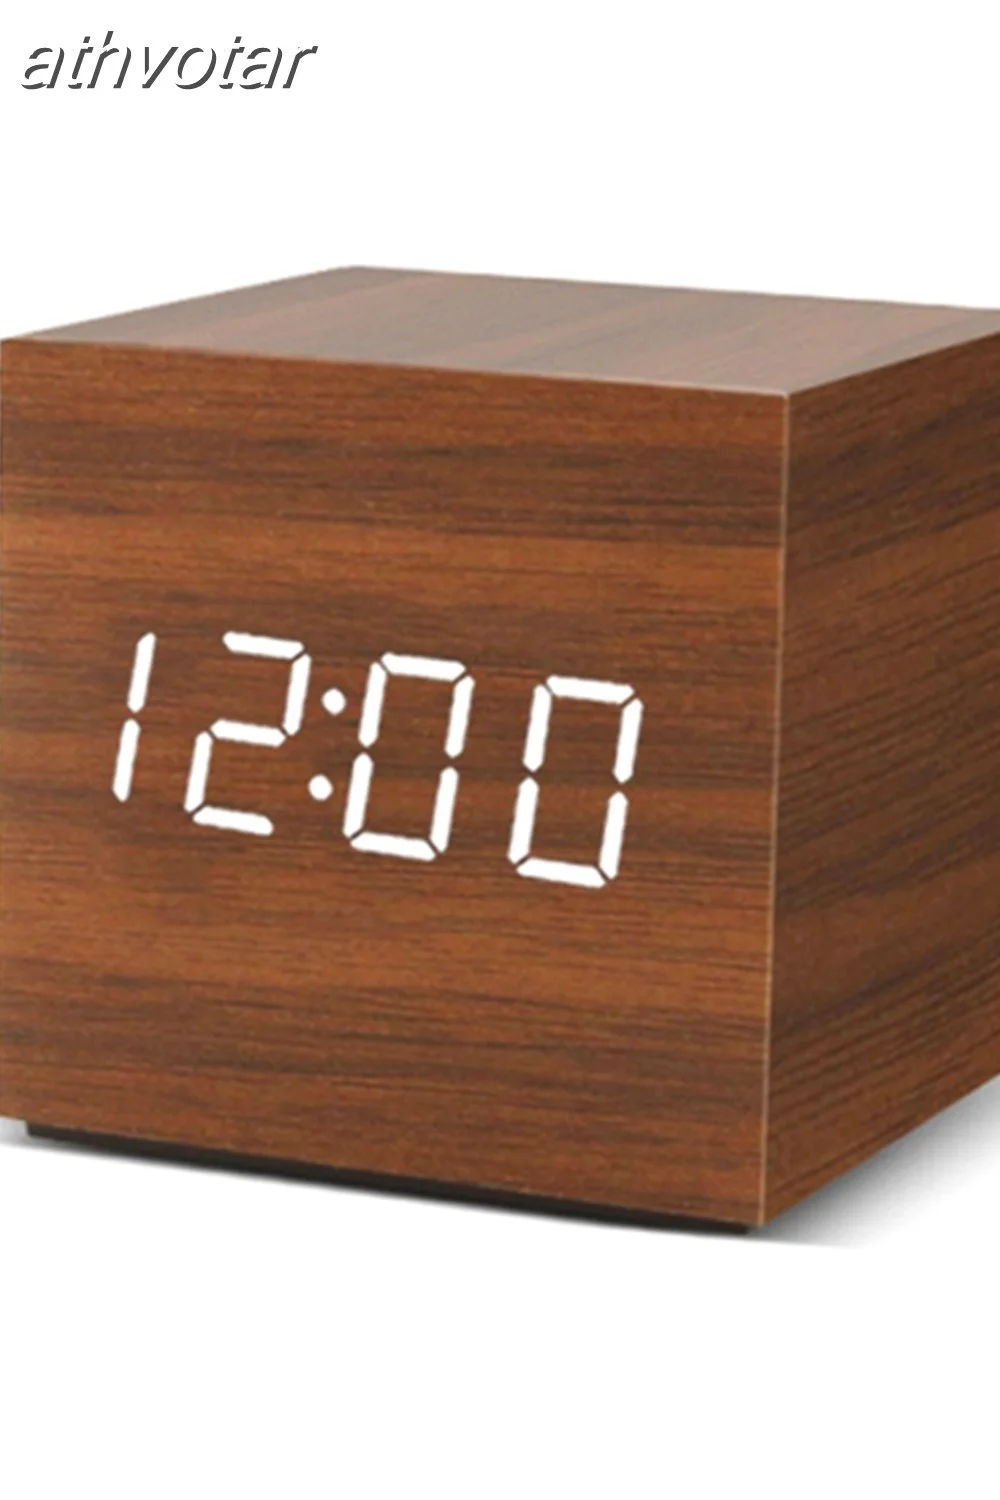 athvotar Clock LED Wooden Table Clock Decor Voice Control Digita Wood Despertador USB/AAA Powered Electronic Desktop Decor Clocks